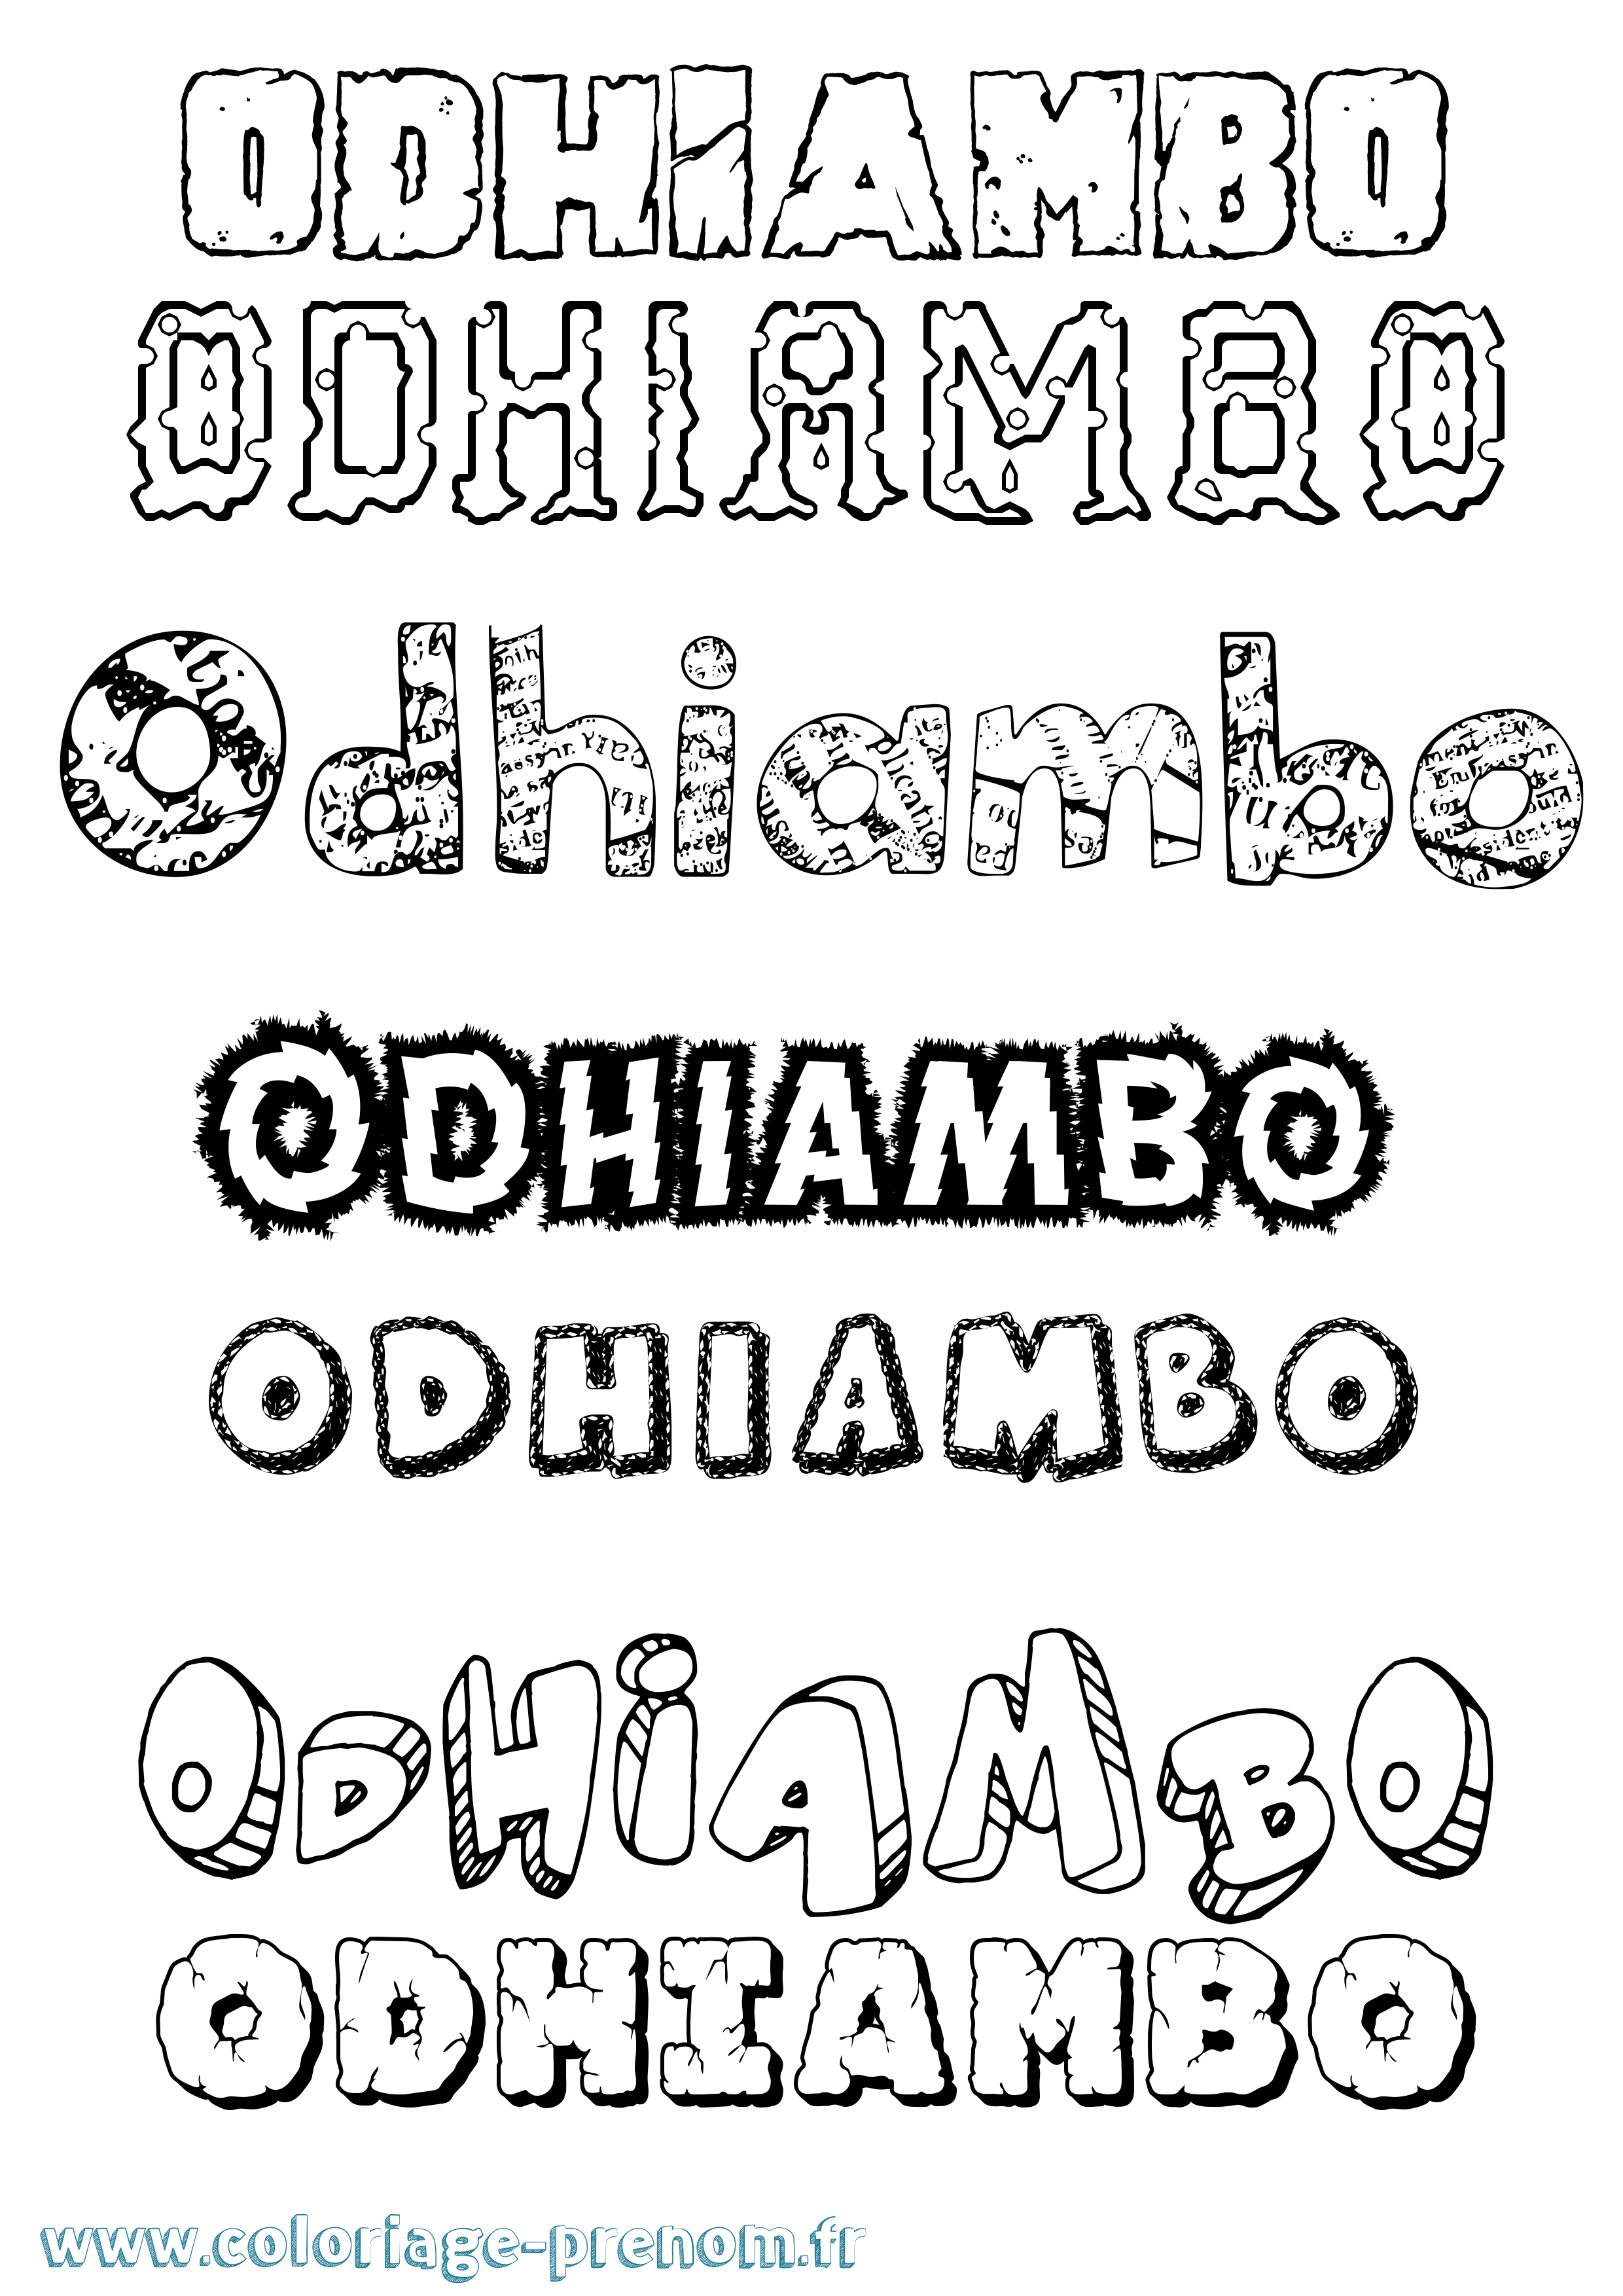 Coloriage prénom Odhiambo Destructuré